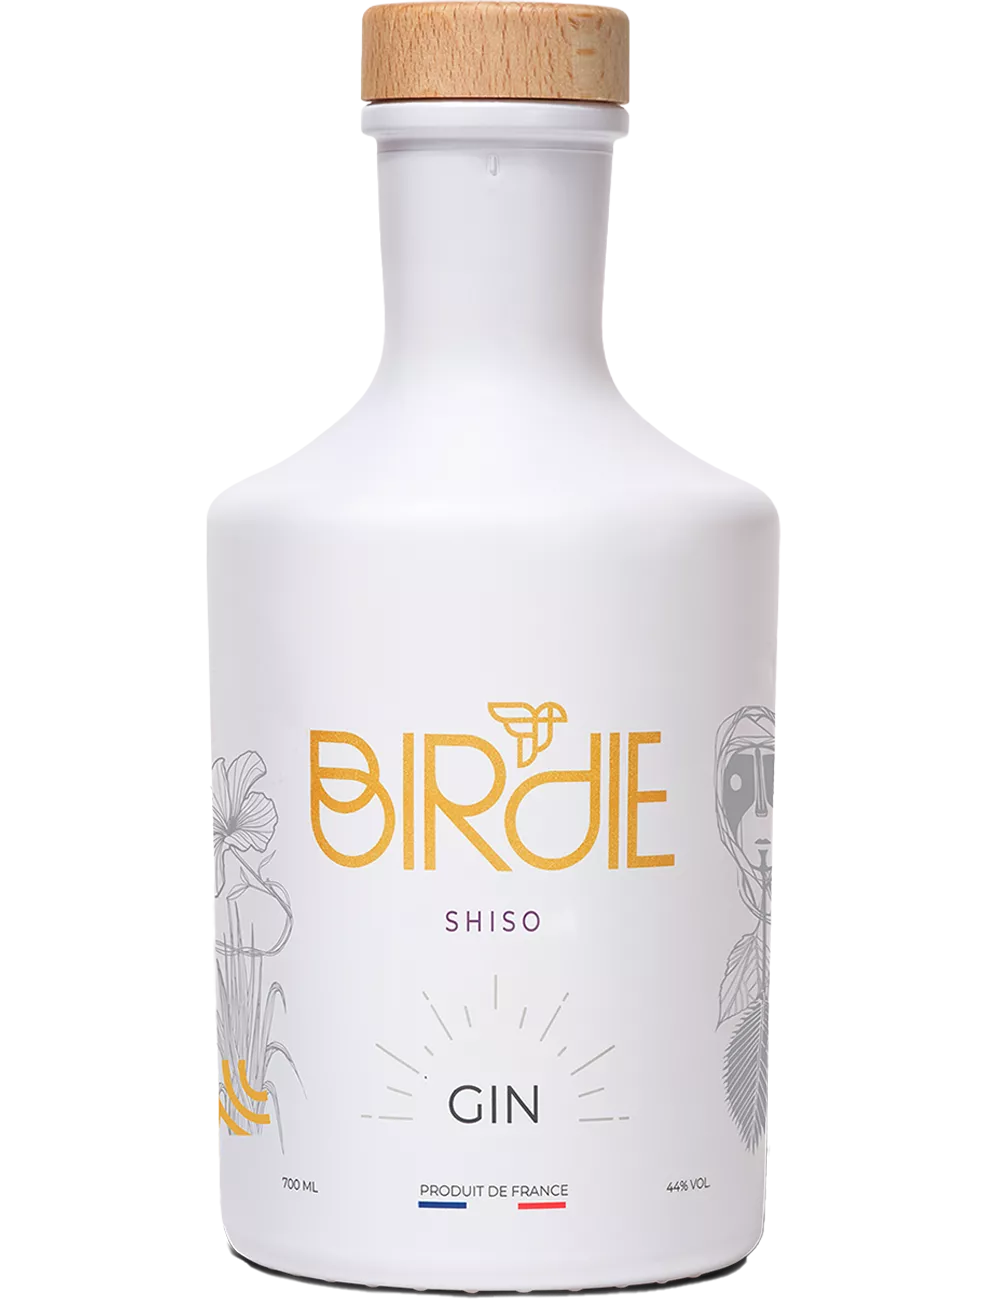 Birdie - Shiso - Gin